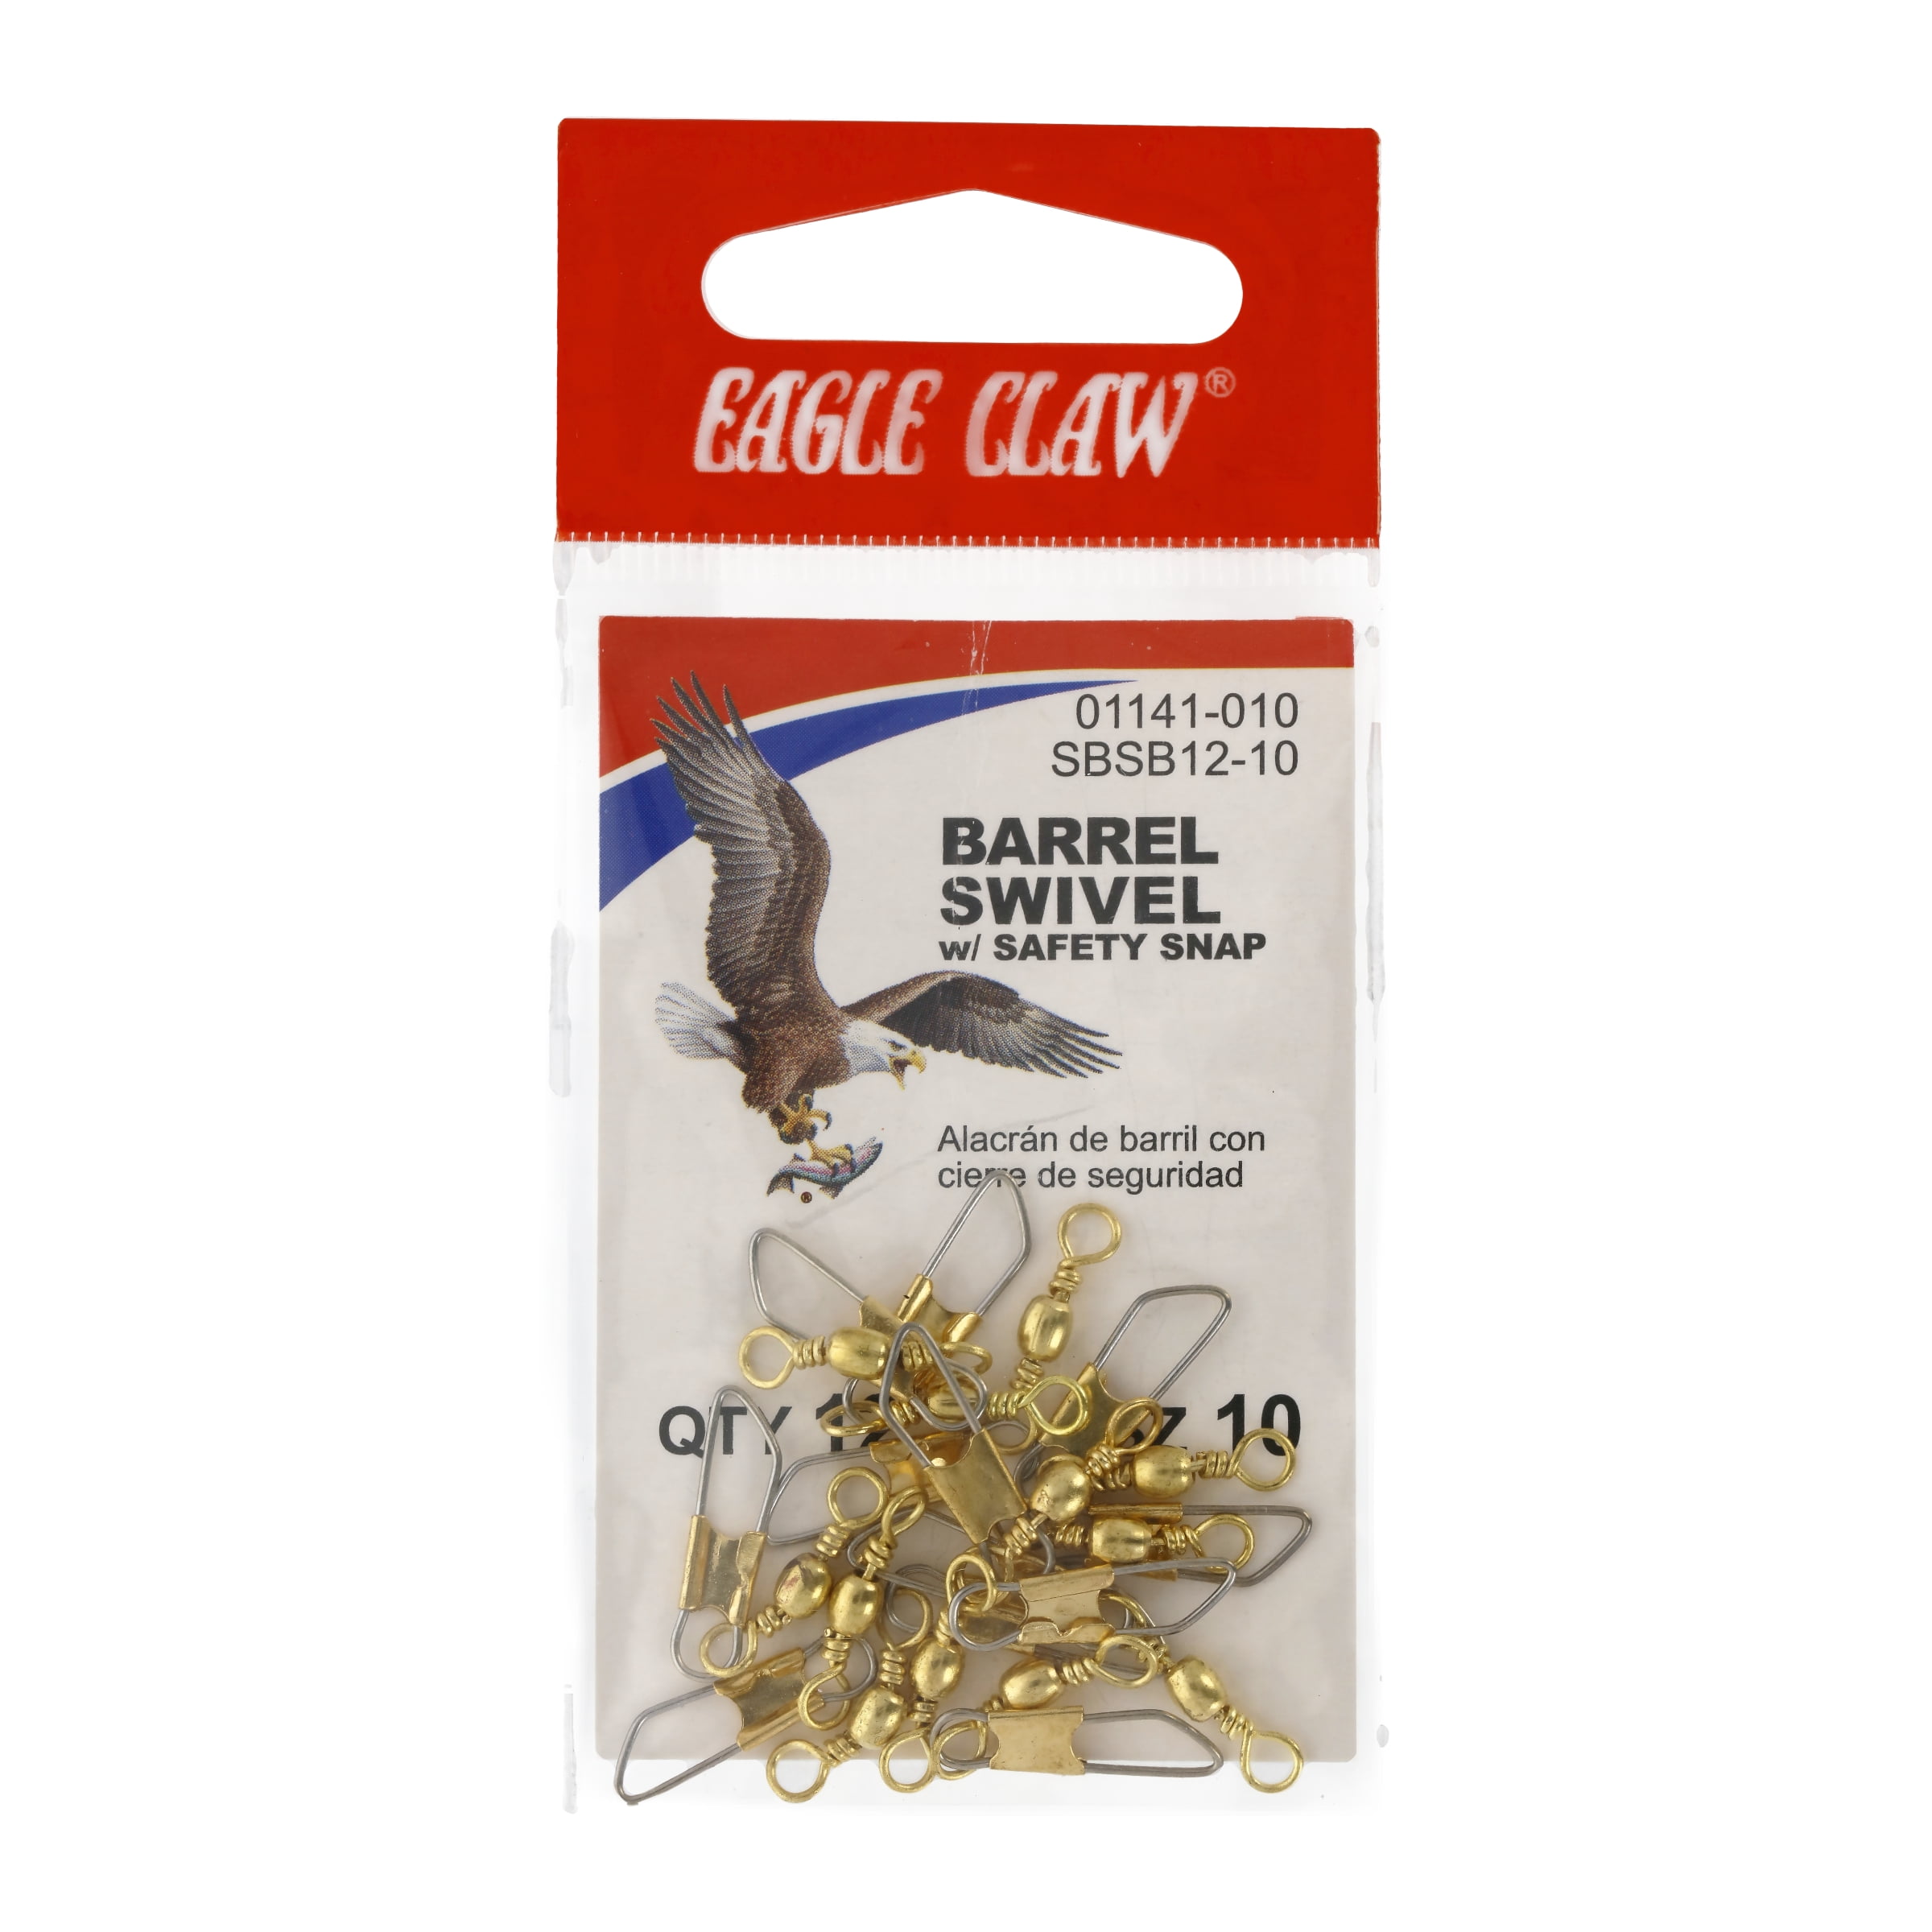 EAGLE CLAW BARREL SWIVEL W/ SAFETY SNAP SZ 7 QTY 12 FREE & SHIPPING SS127